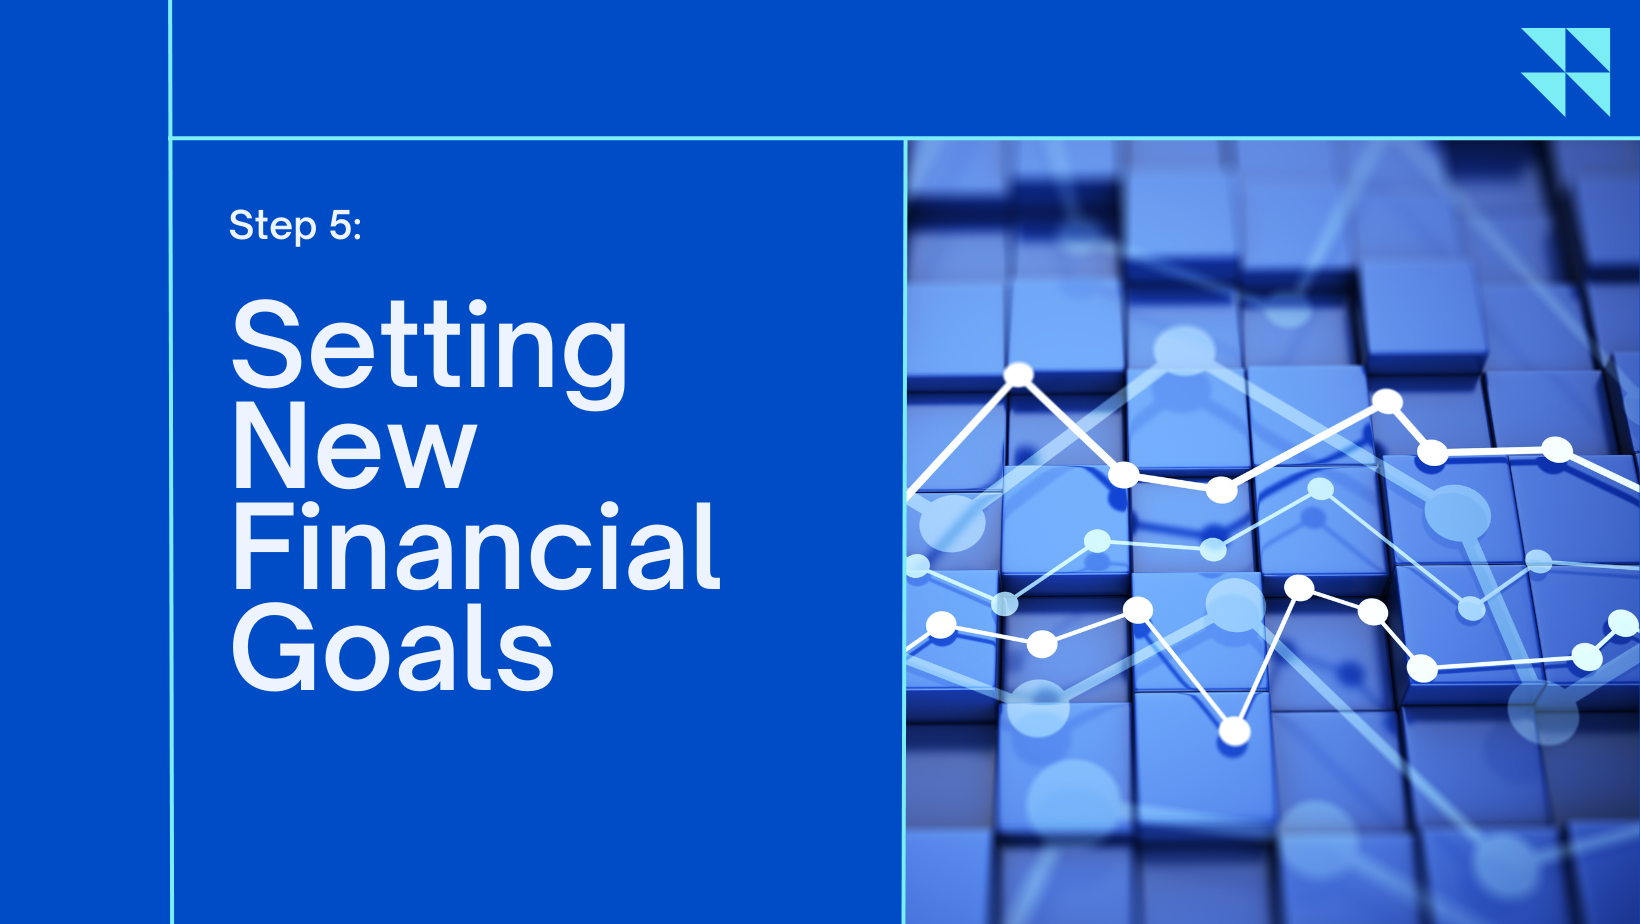 Step 5 Setting New Financial Goals